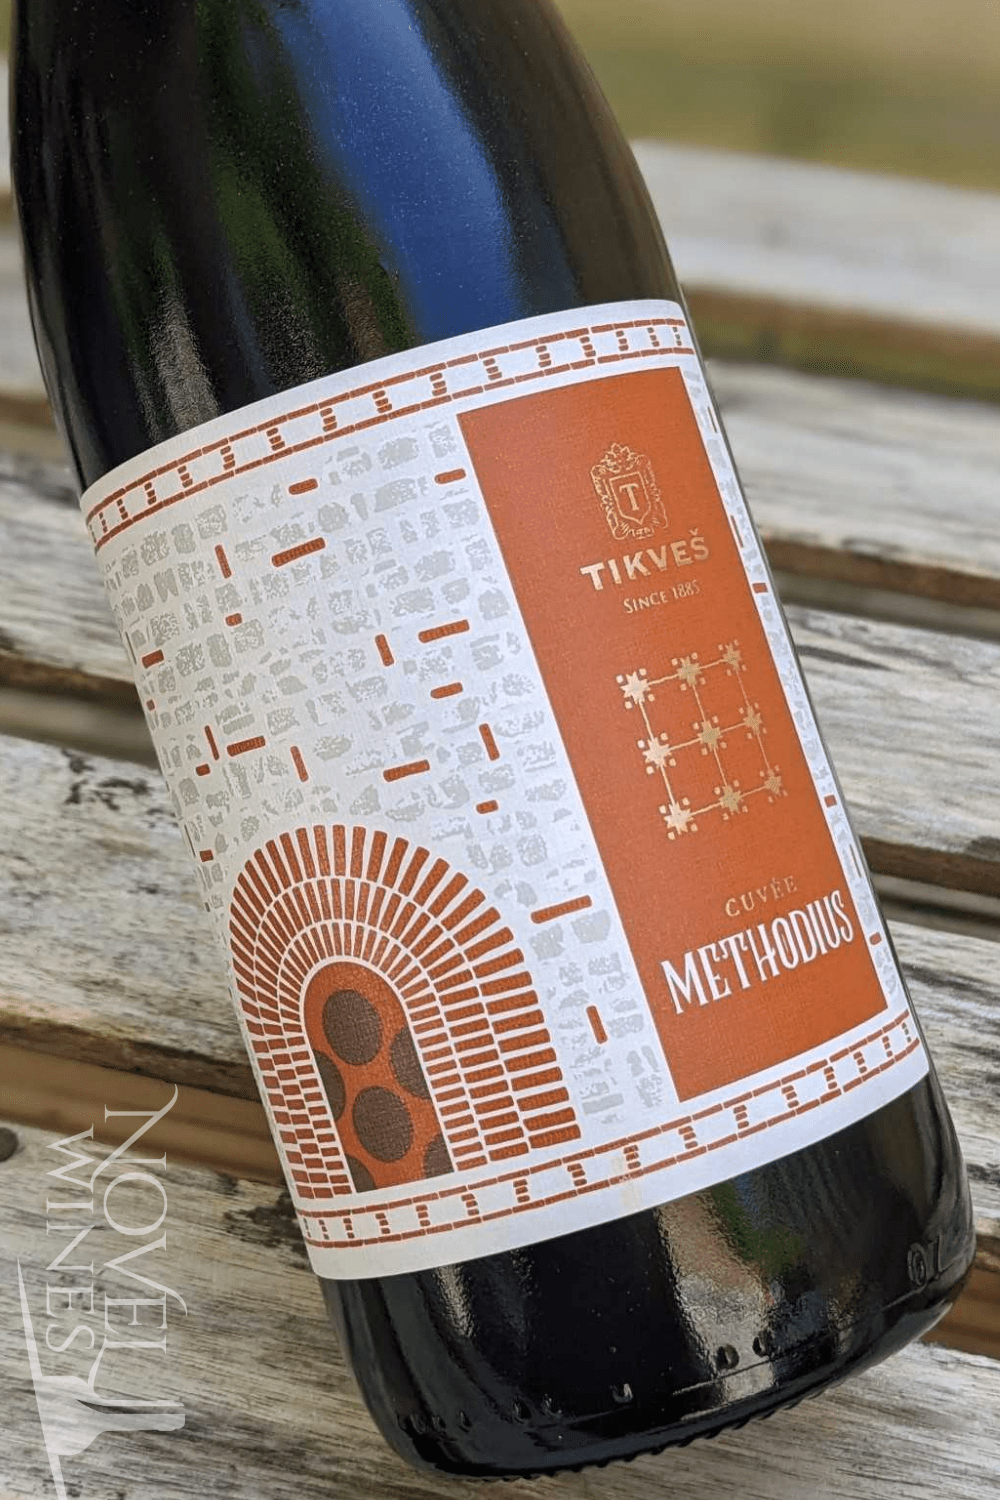 Tikveš Winery Red Wine Tikves Cuvee Methodius Vranec 2021, North Macedonia